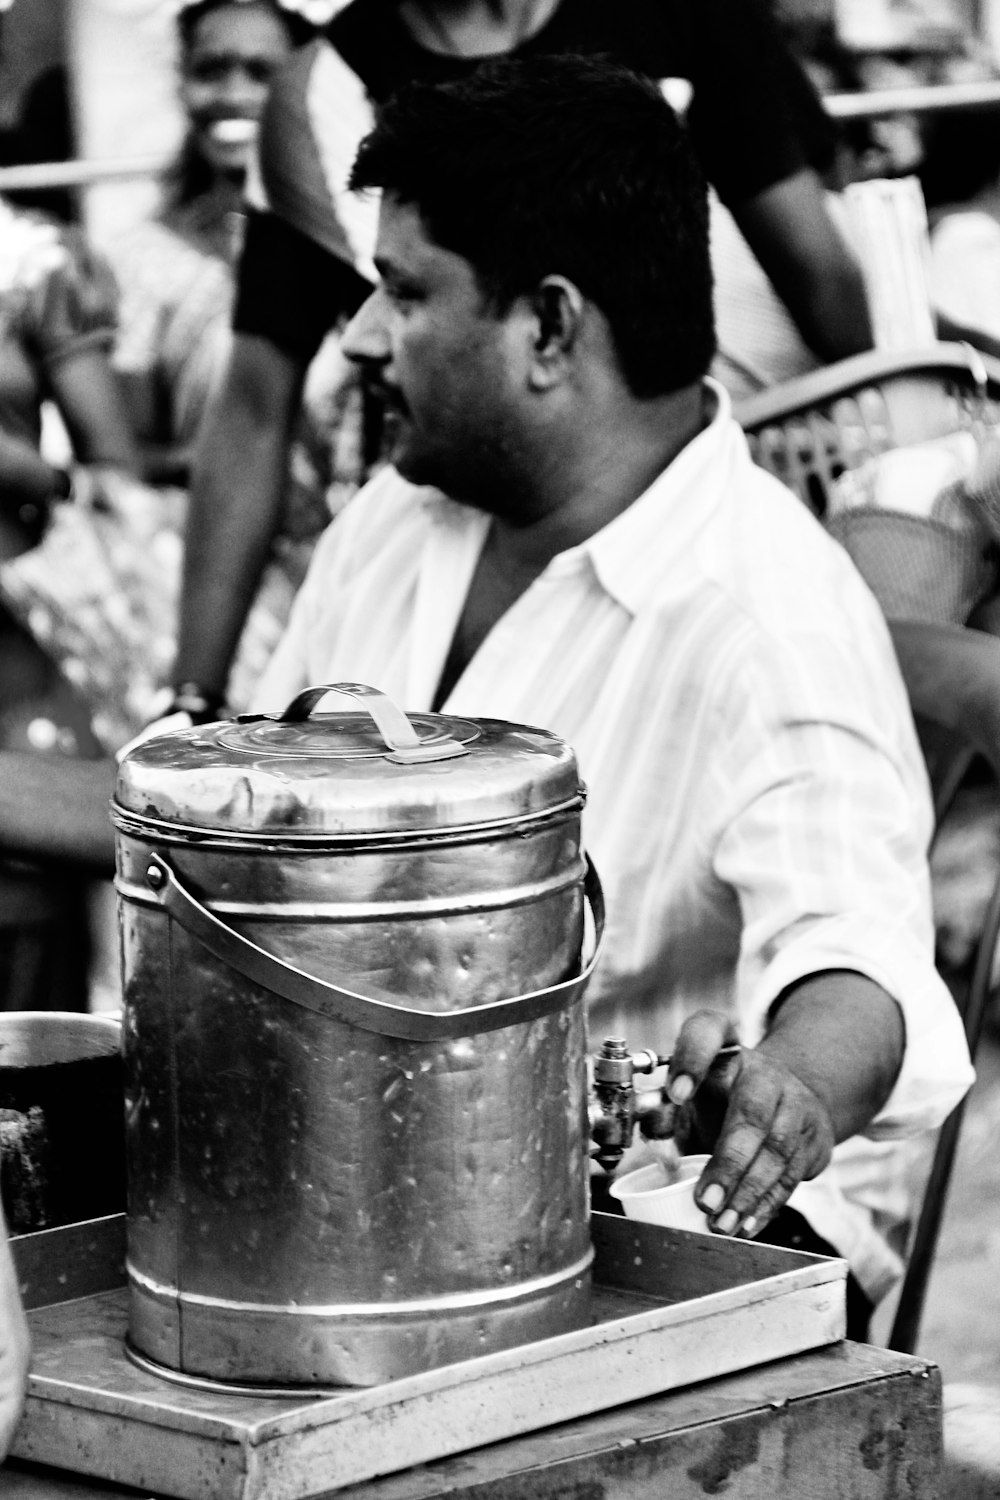 man in white dress shirt holding stainless steel bucket